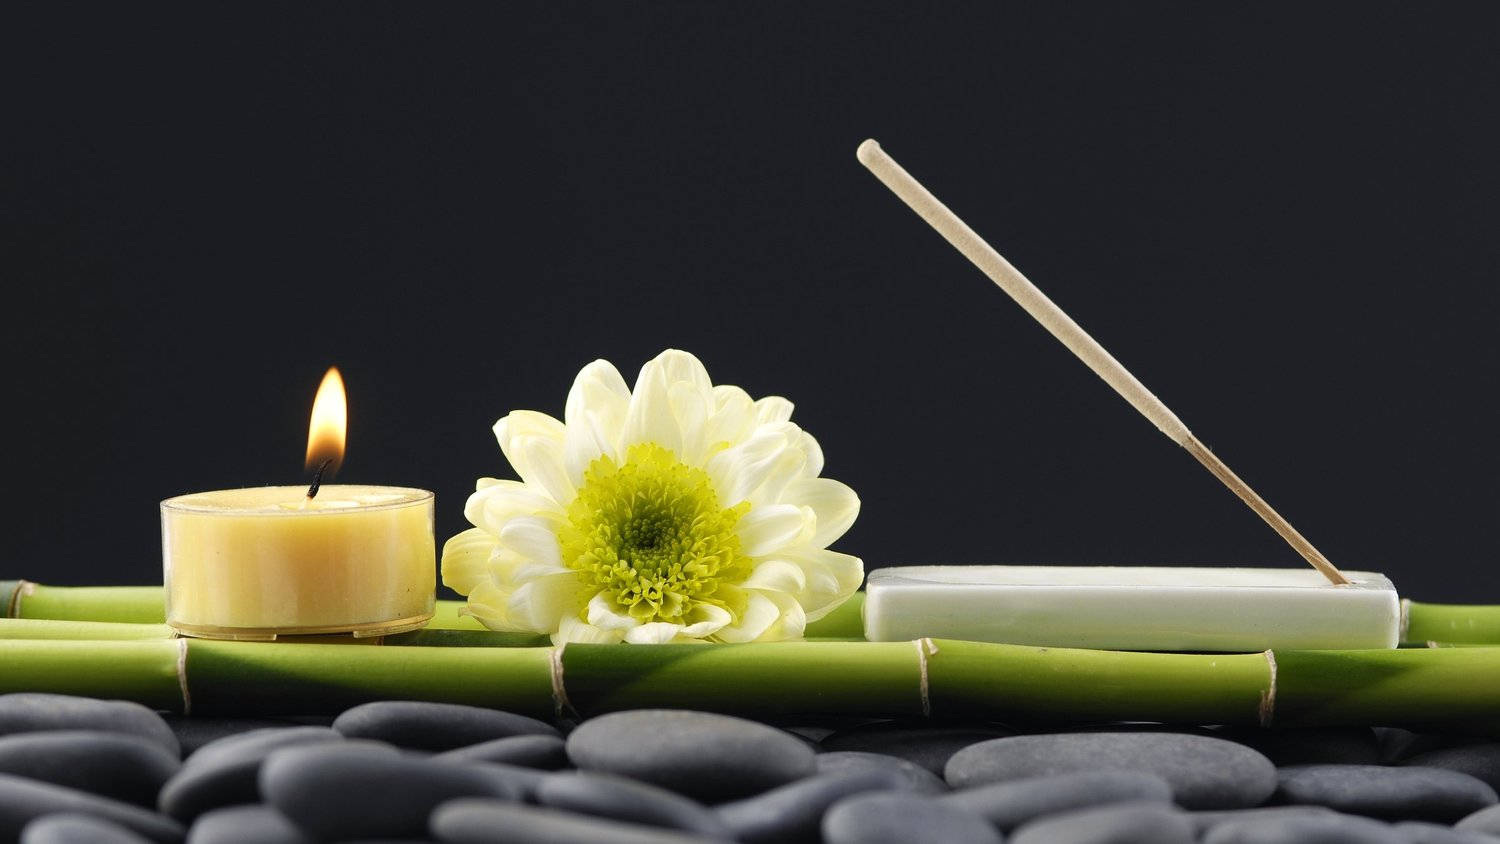 Bamboo 4k Chrysanthemum Candle Stones Massage